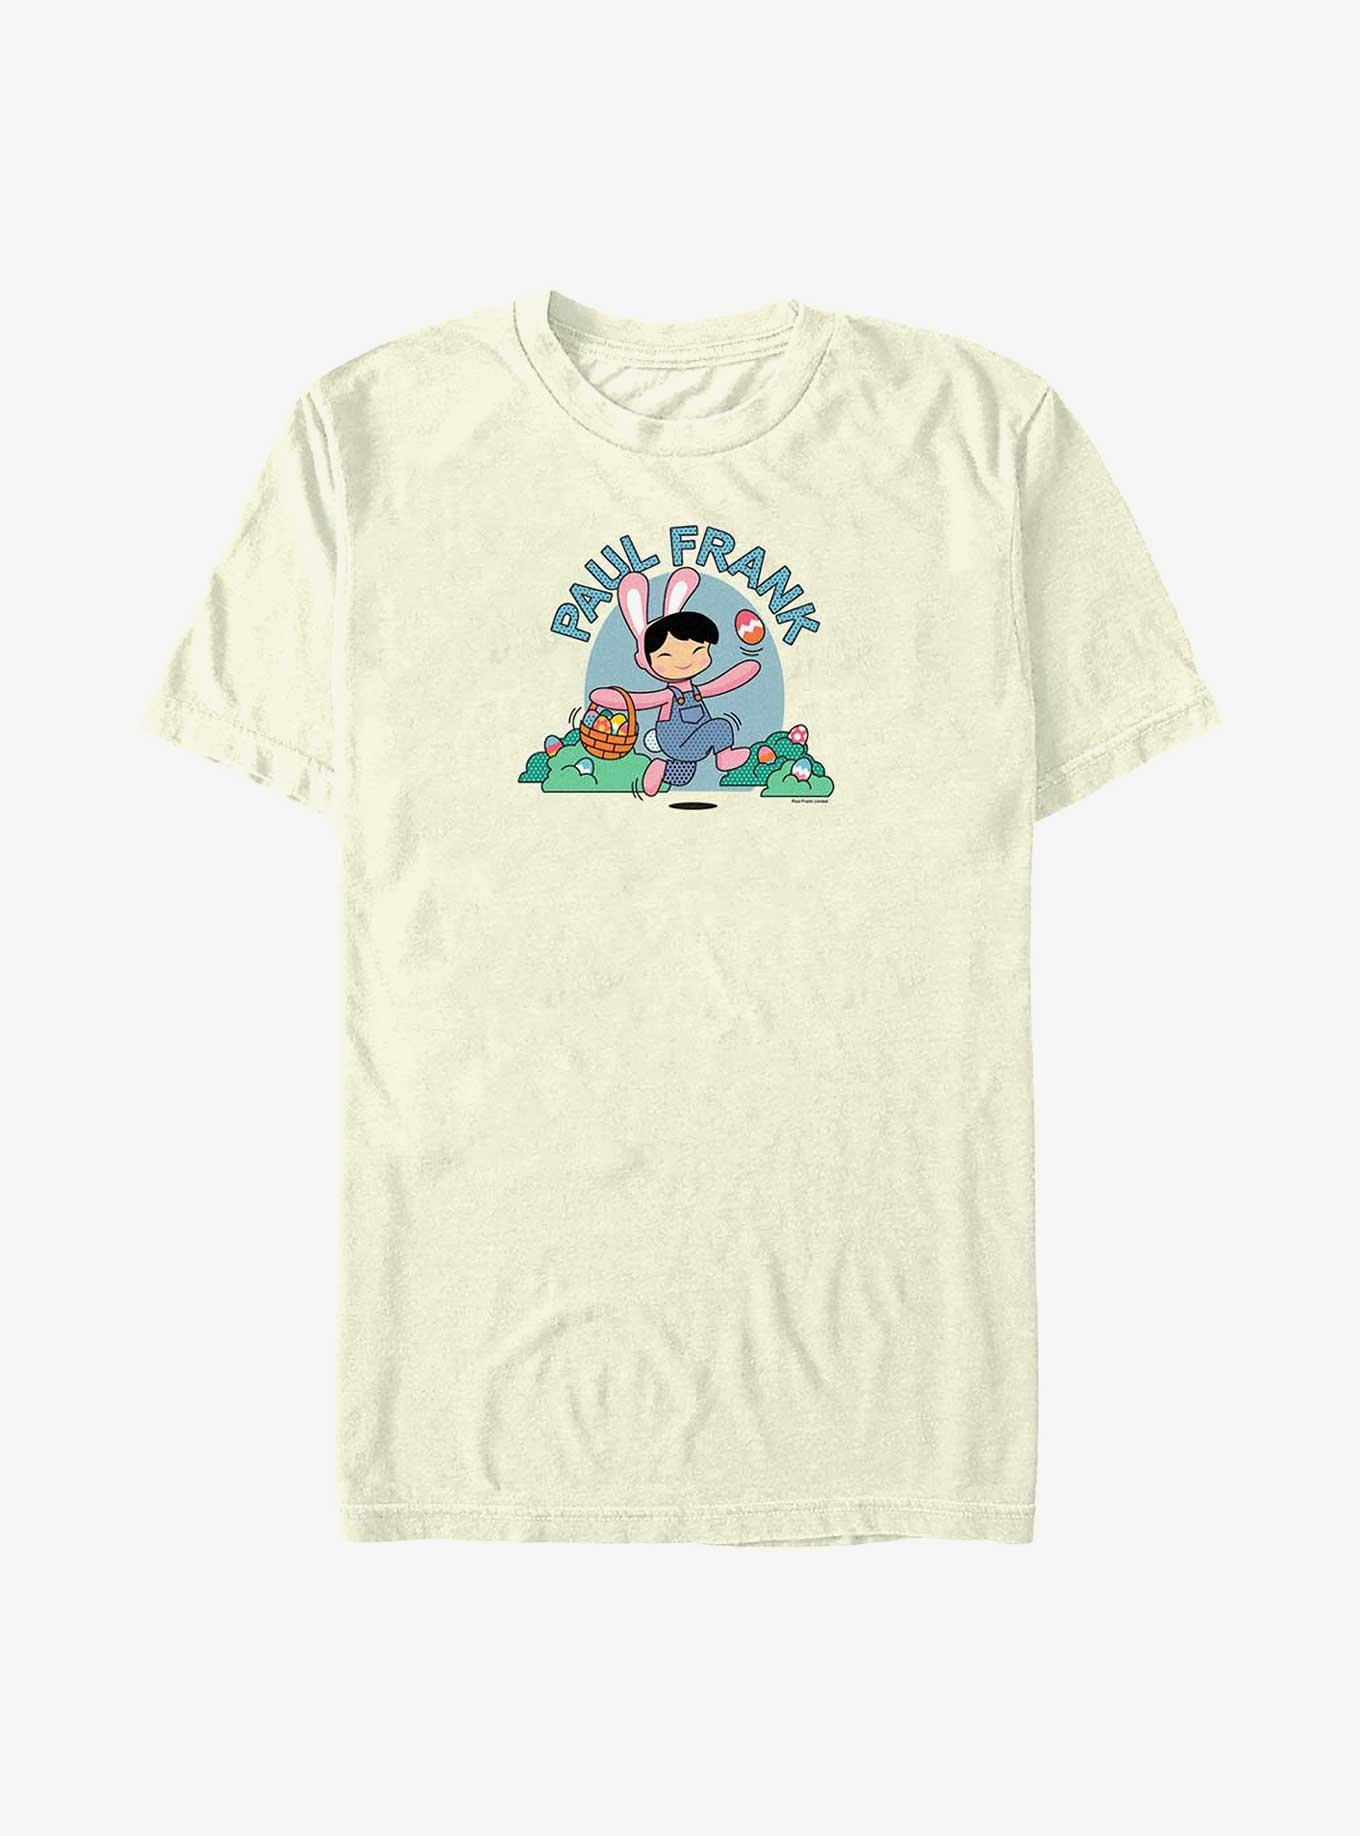 Paul Frank Easter Bunny T-Shirt